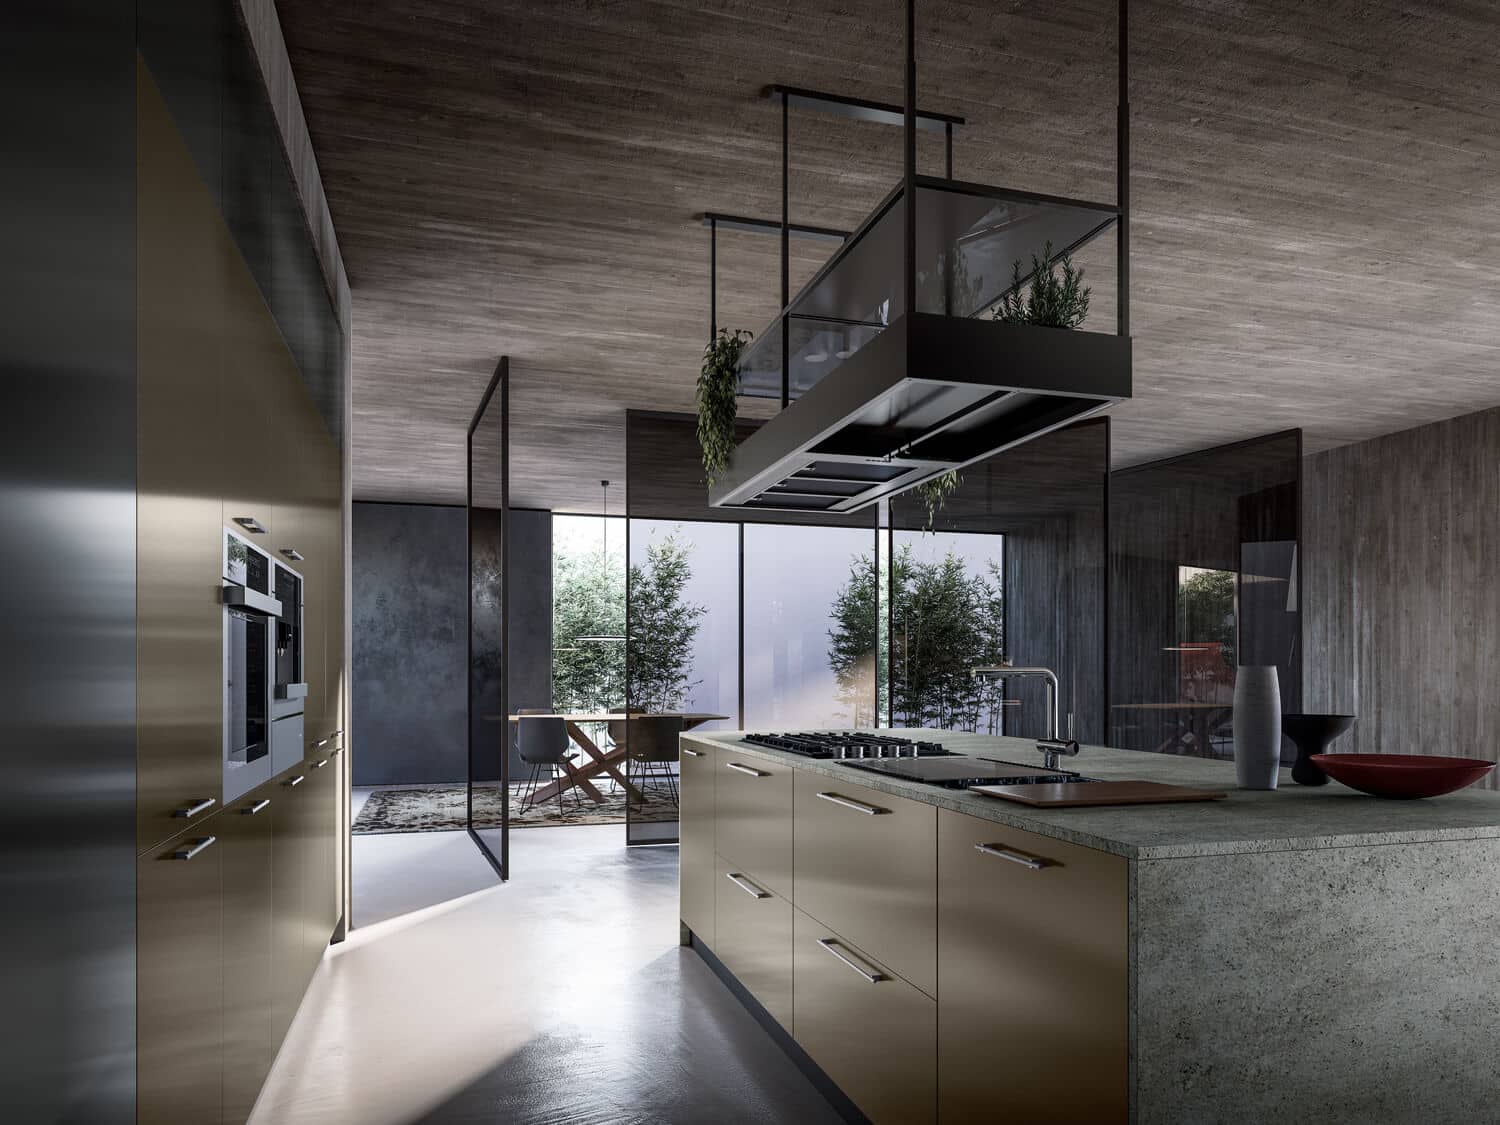 Modern kitchen with a metropolitan feel. Modern handles. Open layout environment.